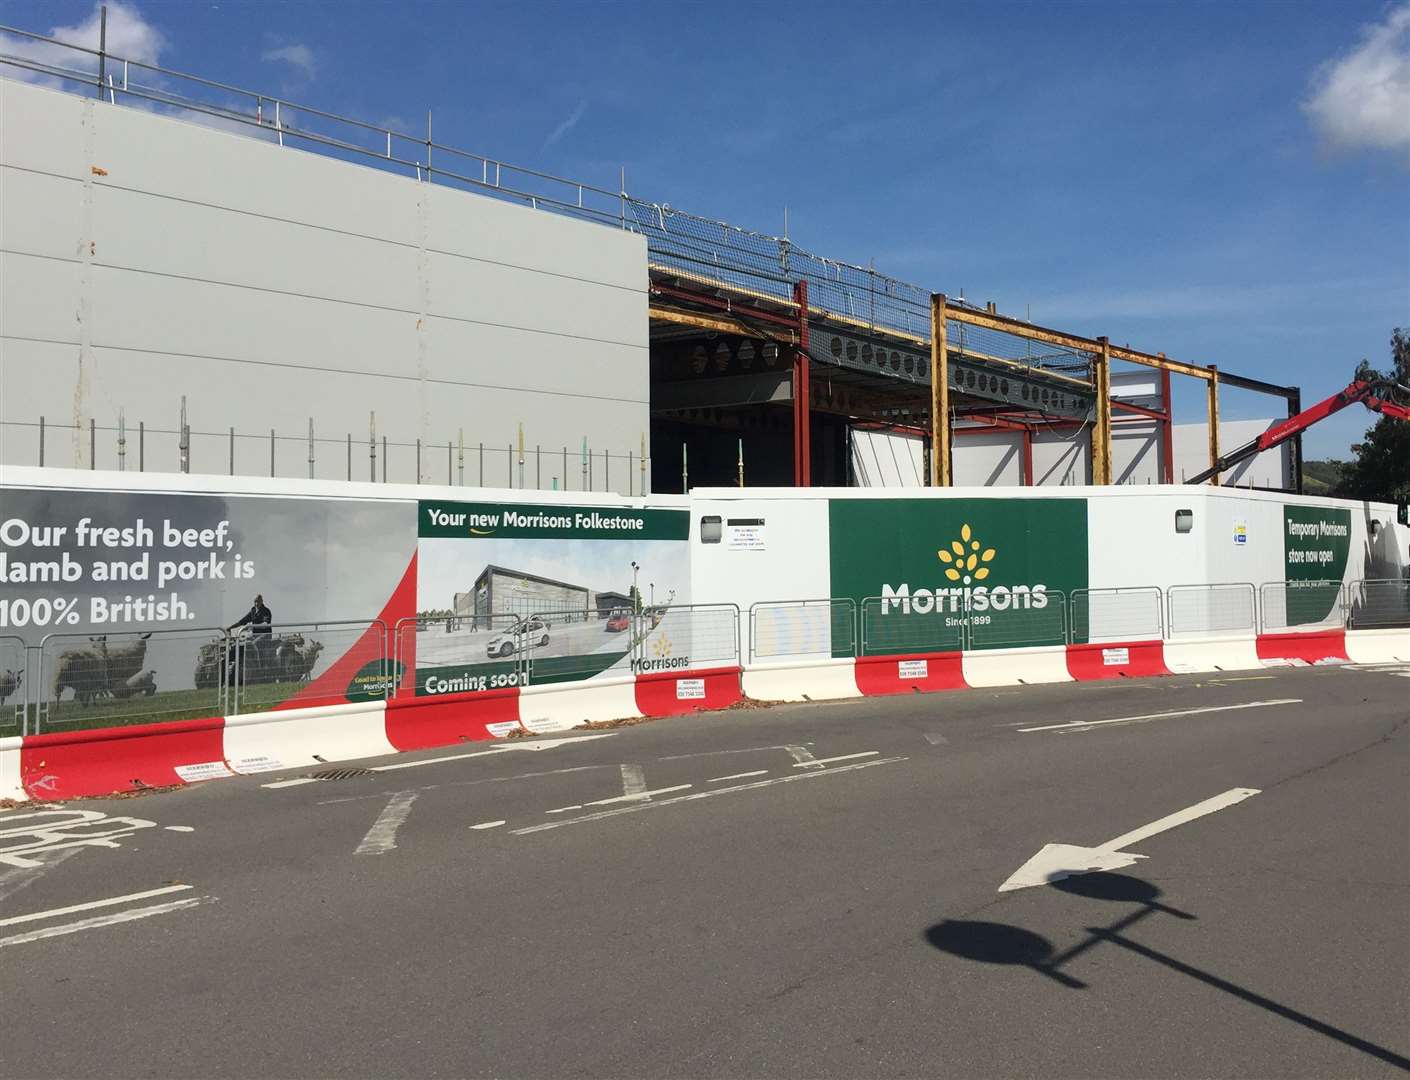 Work is progressing on the new Morrisons supermarket